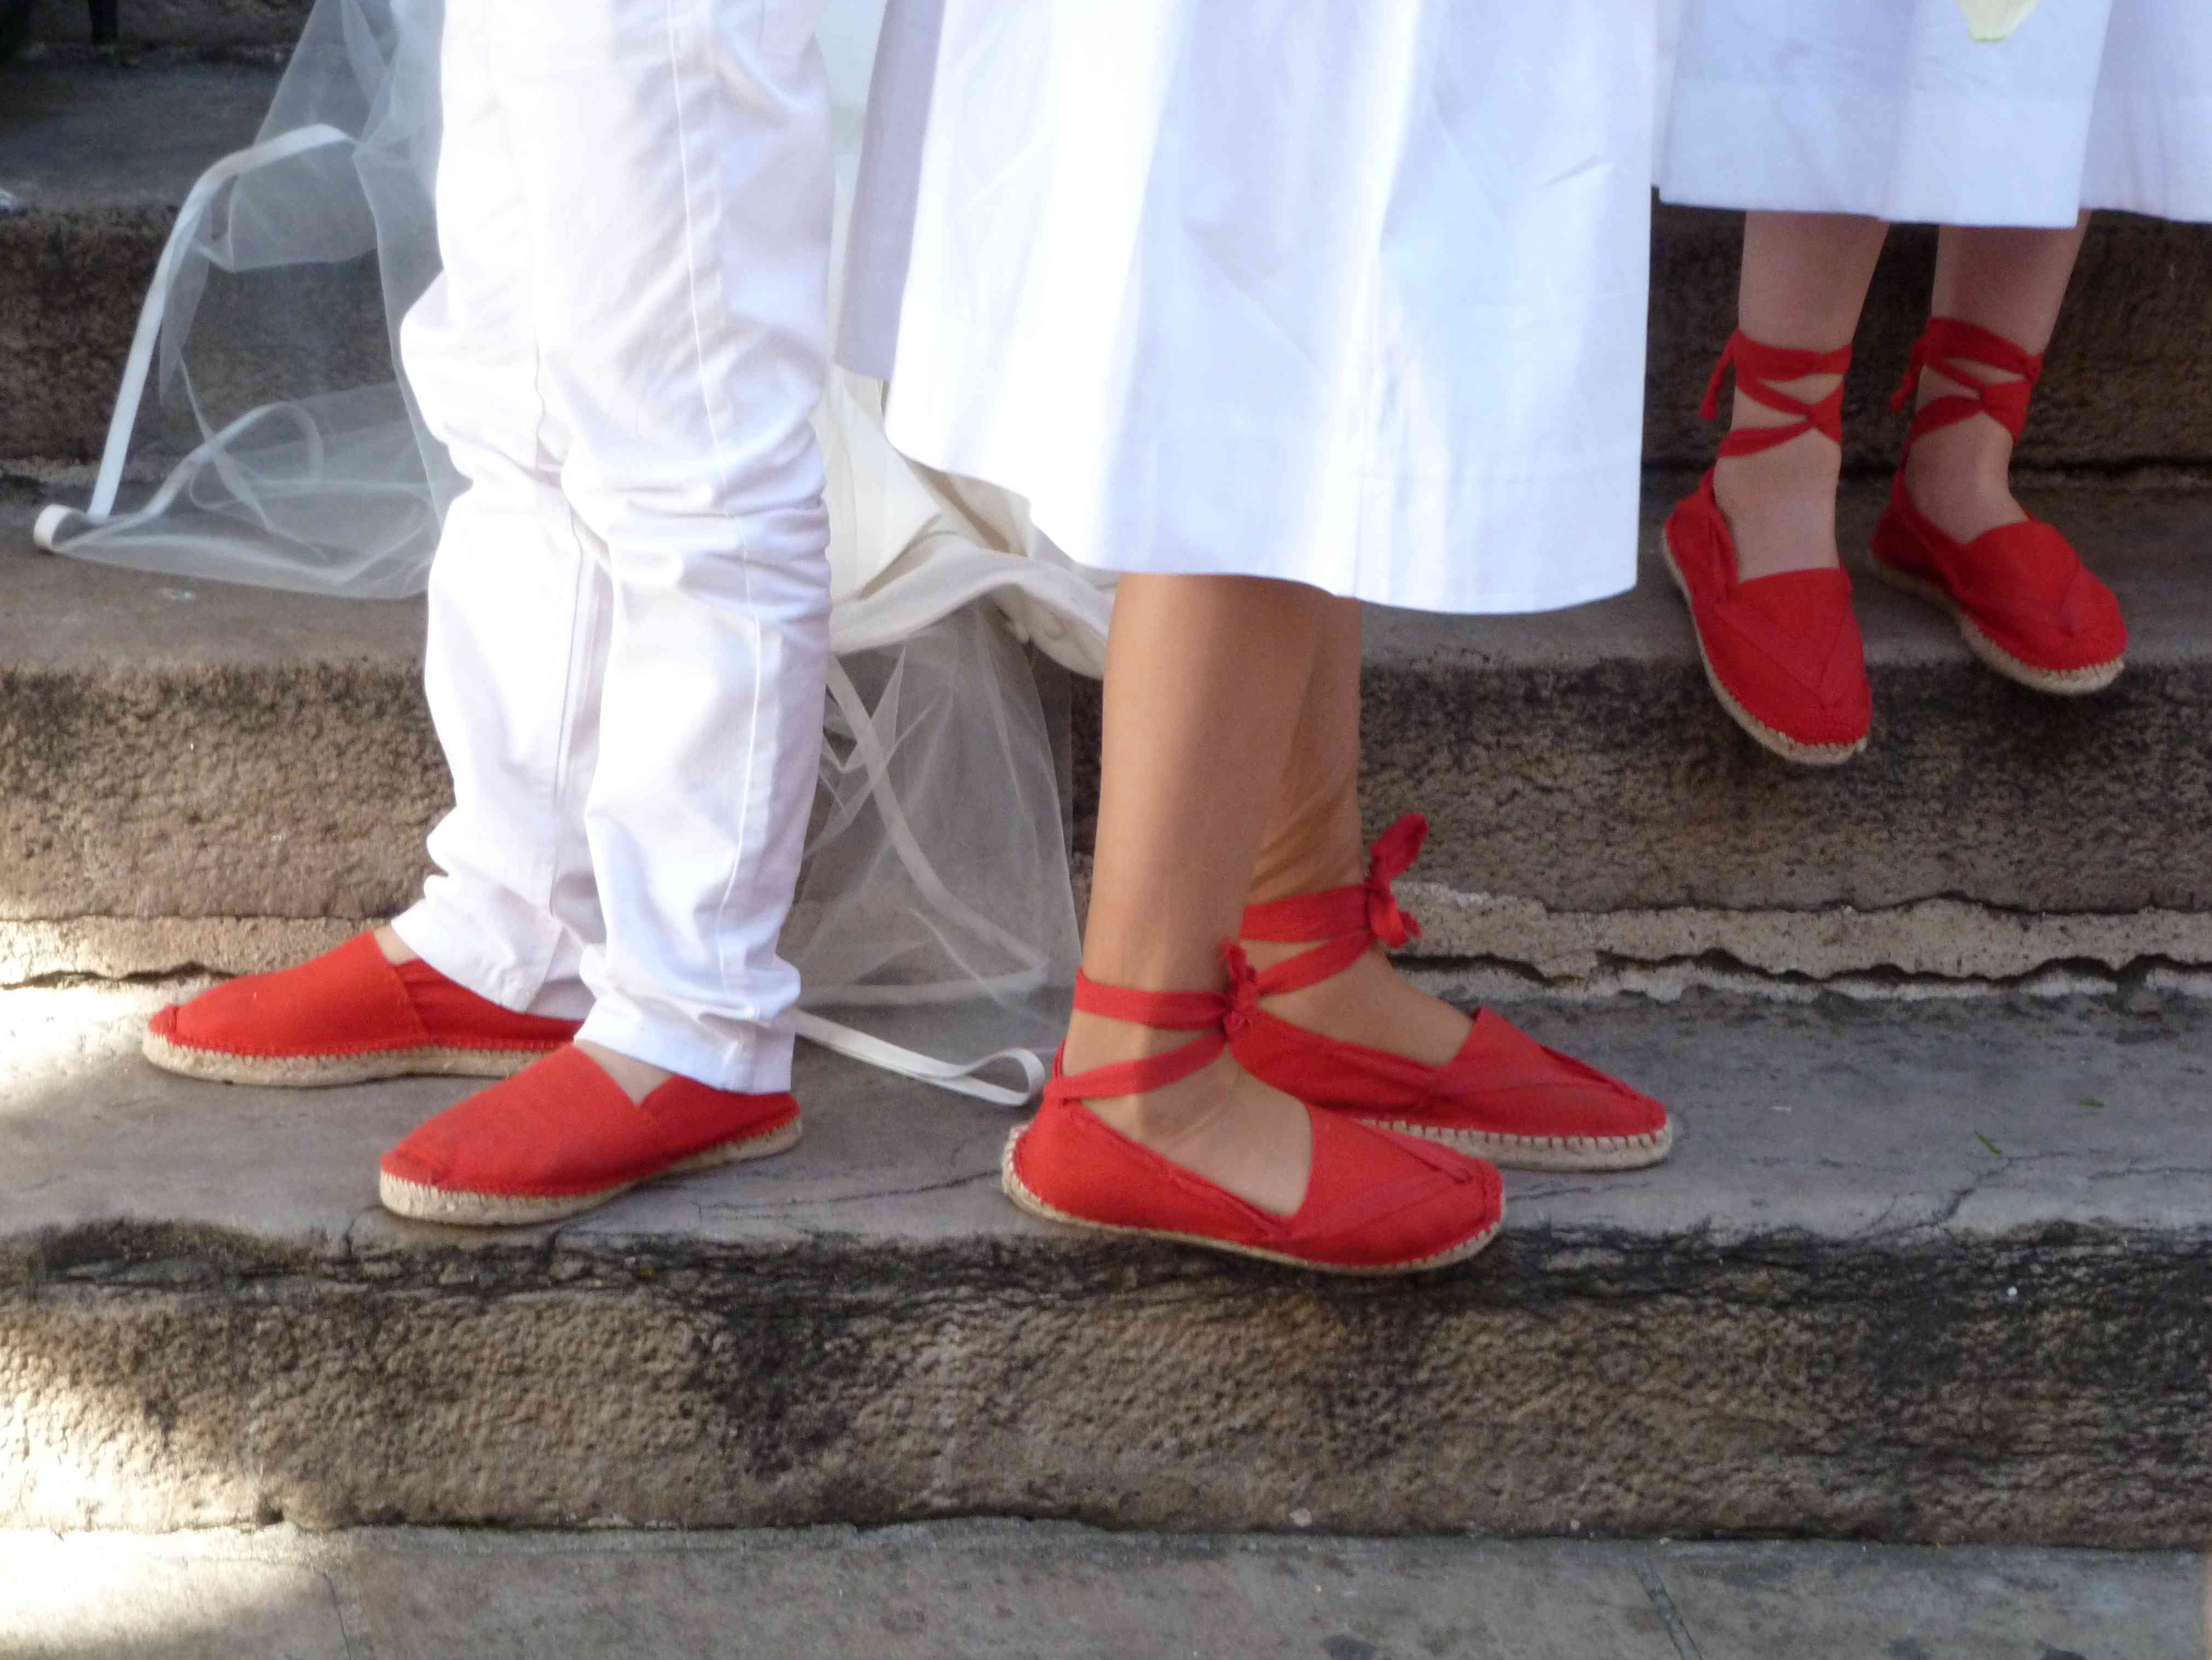 Mariage basque 10-2013 espadrilles rouges